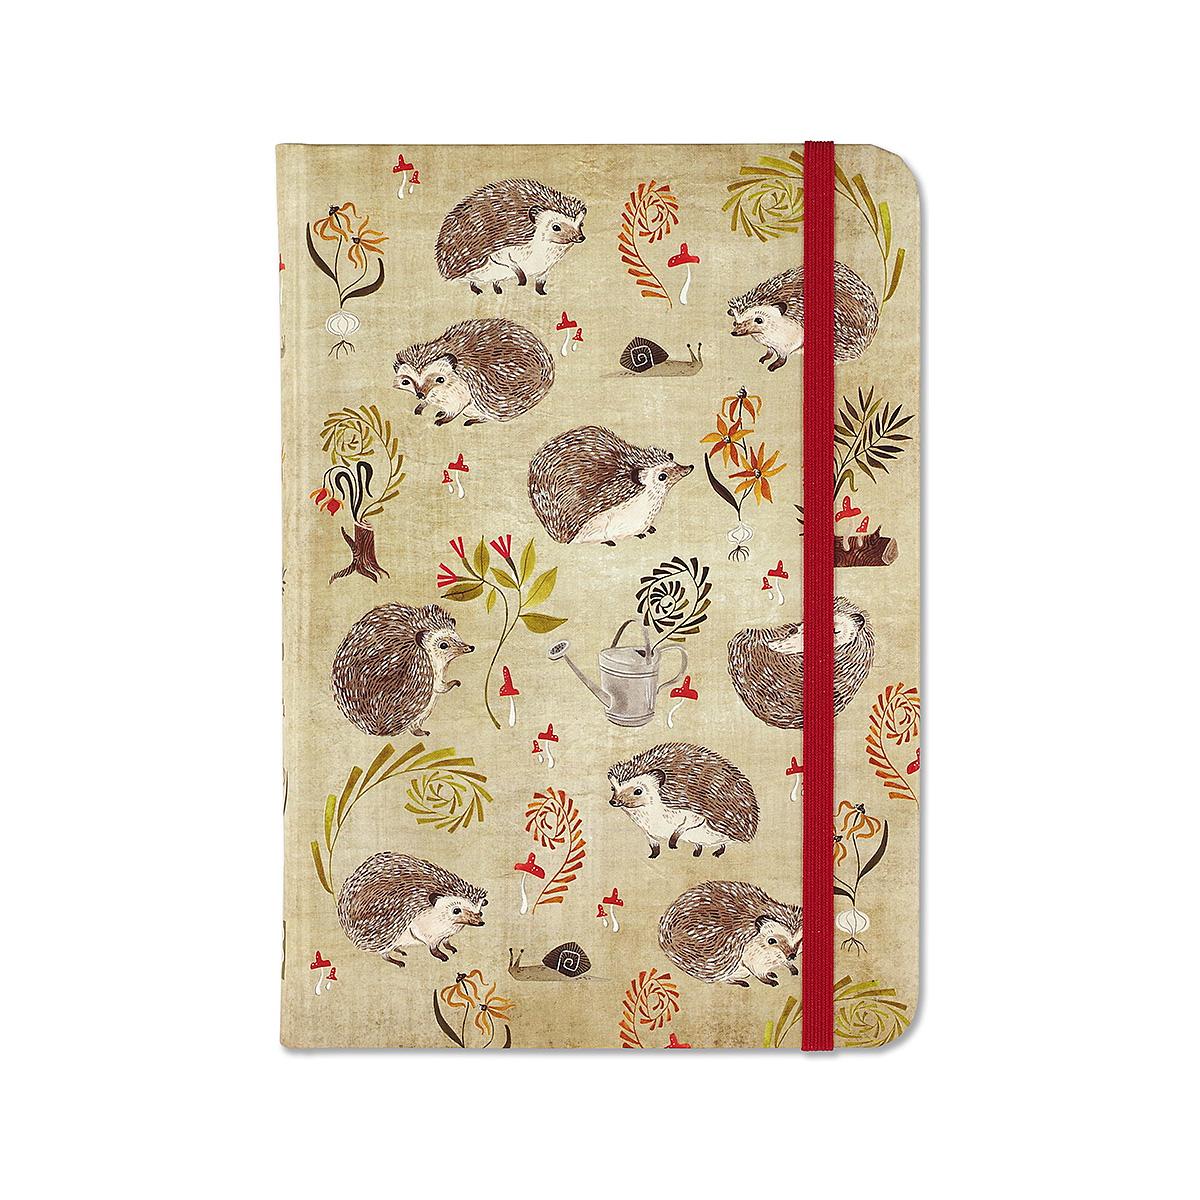  Small Hedgehogs Journal